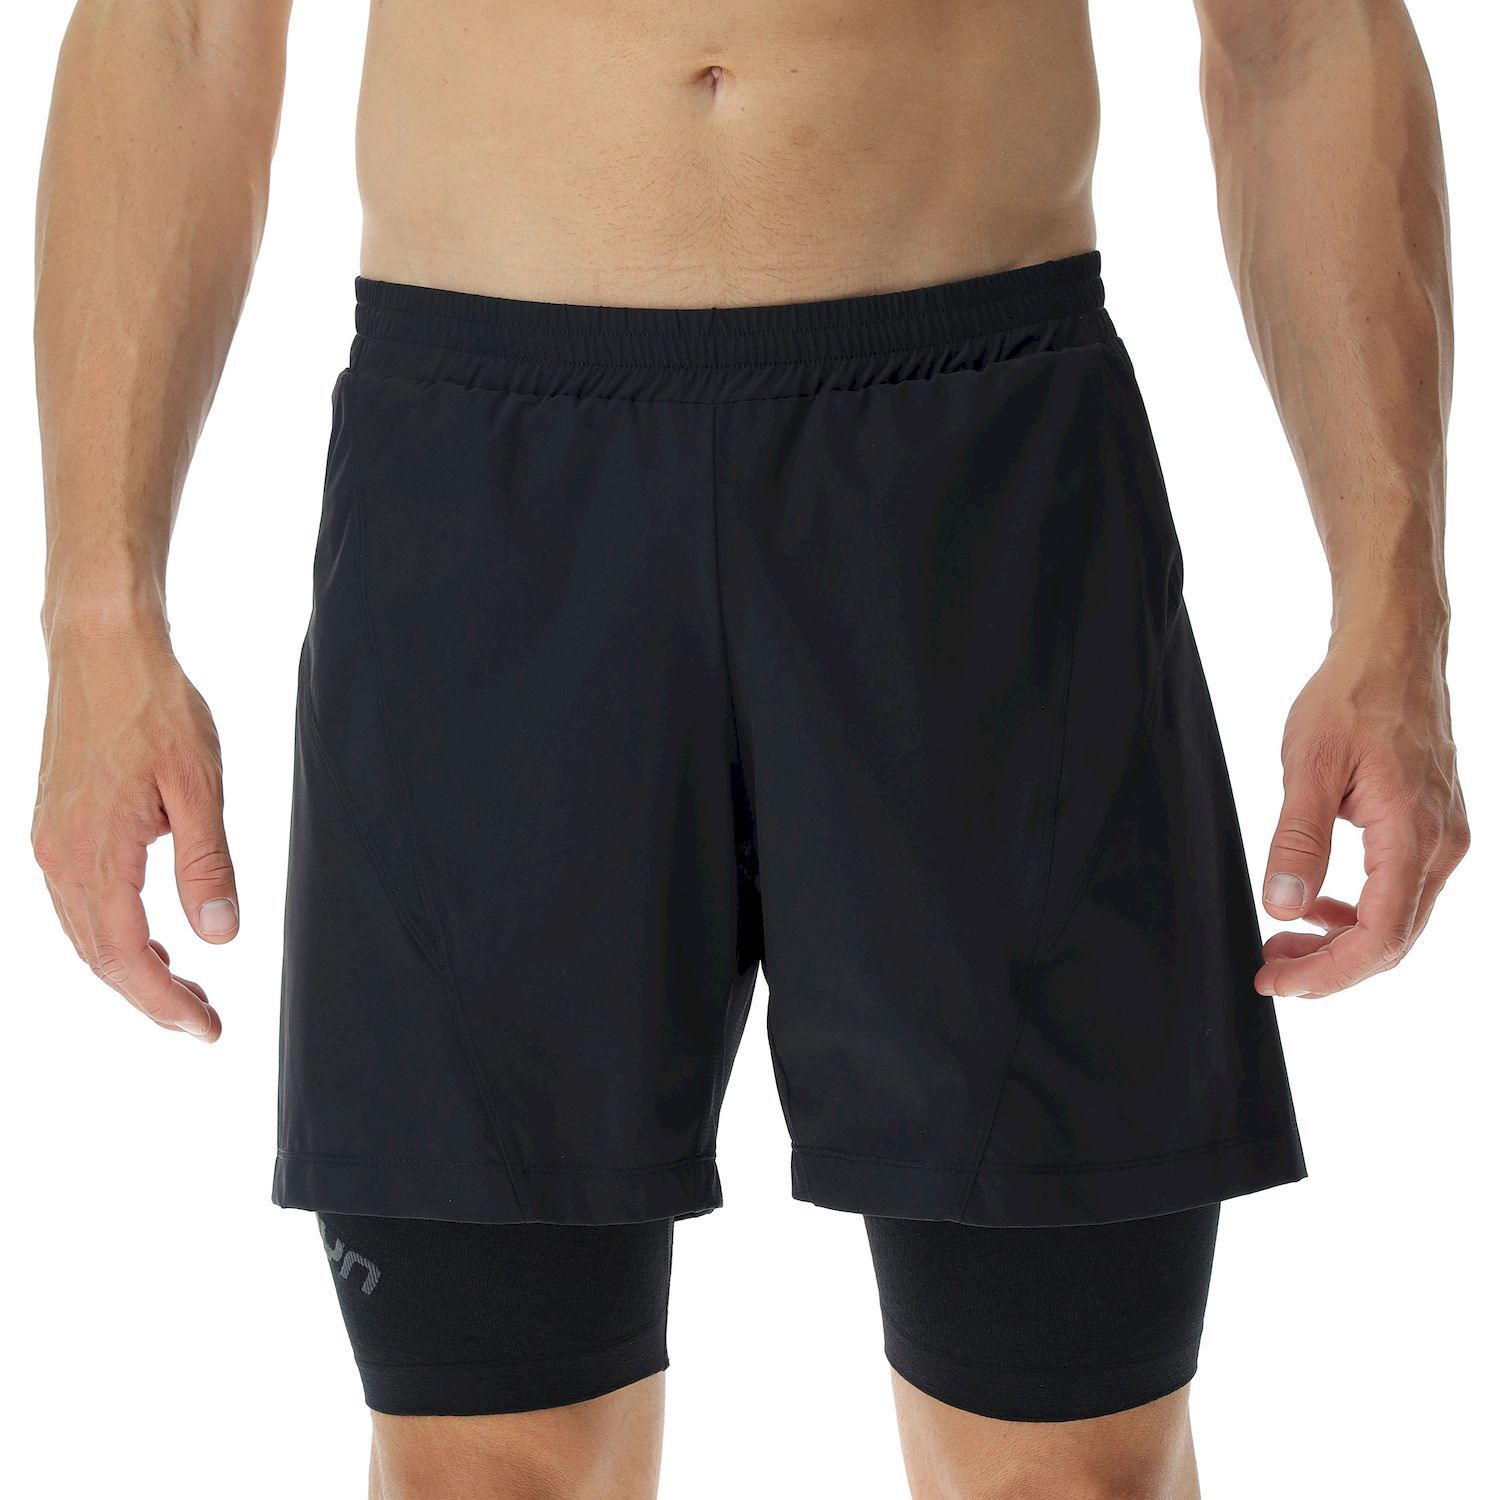 Uyn Running Exceleration Ow Performance 2In1 Short - Running shorts - Men's